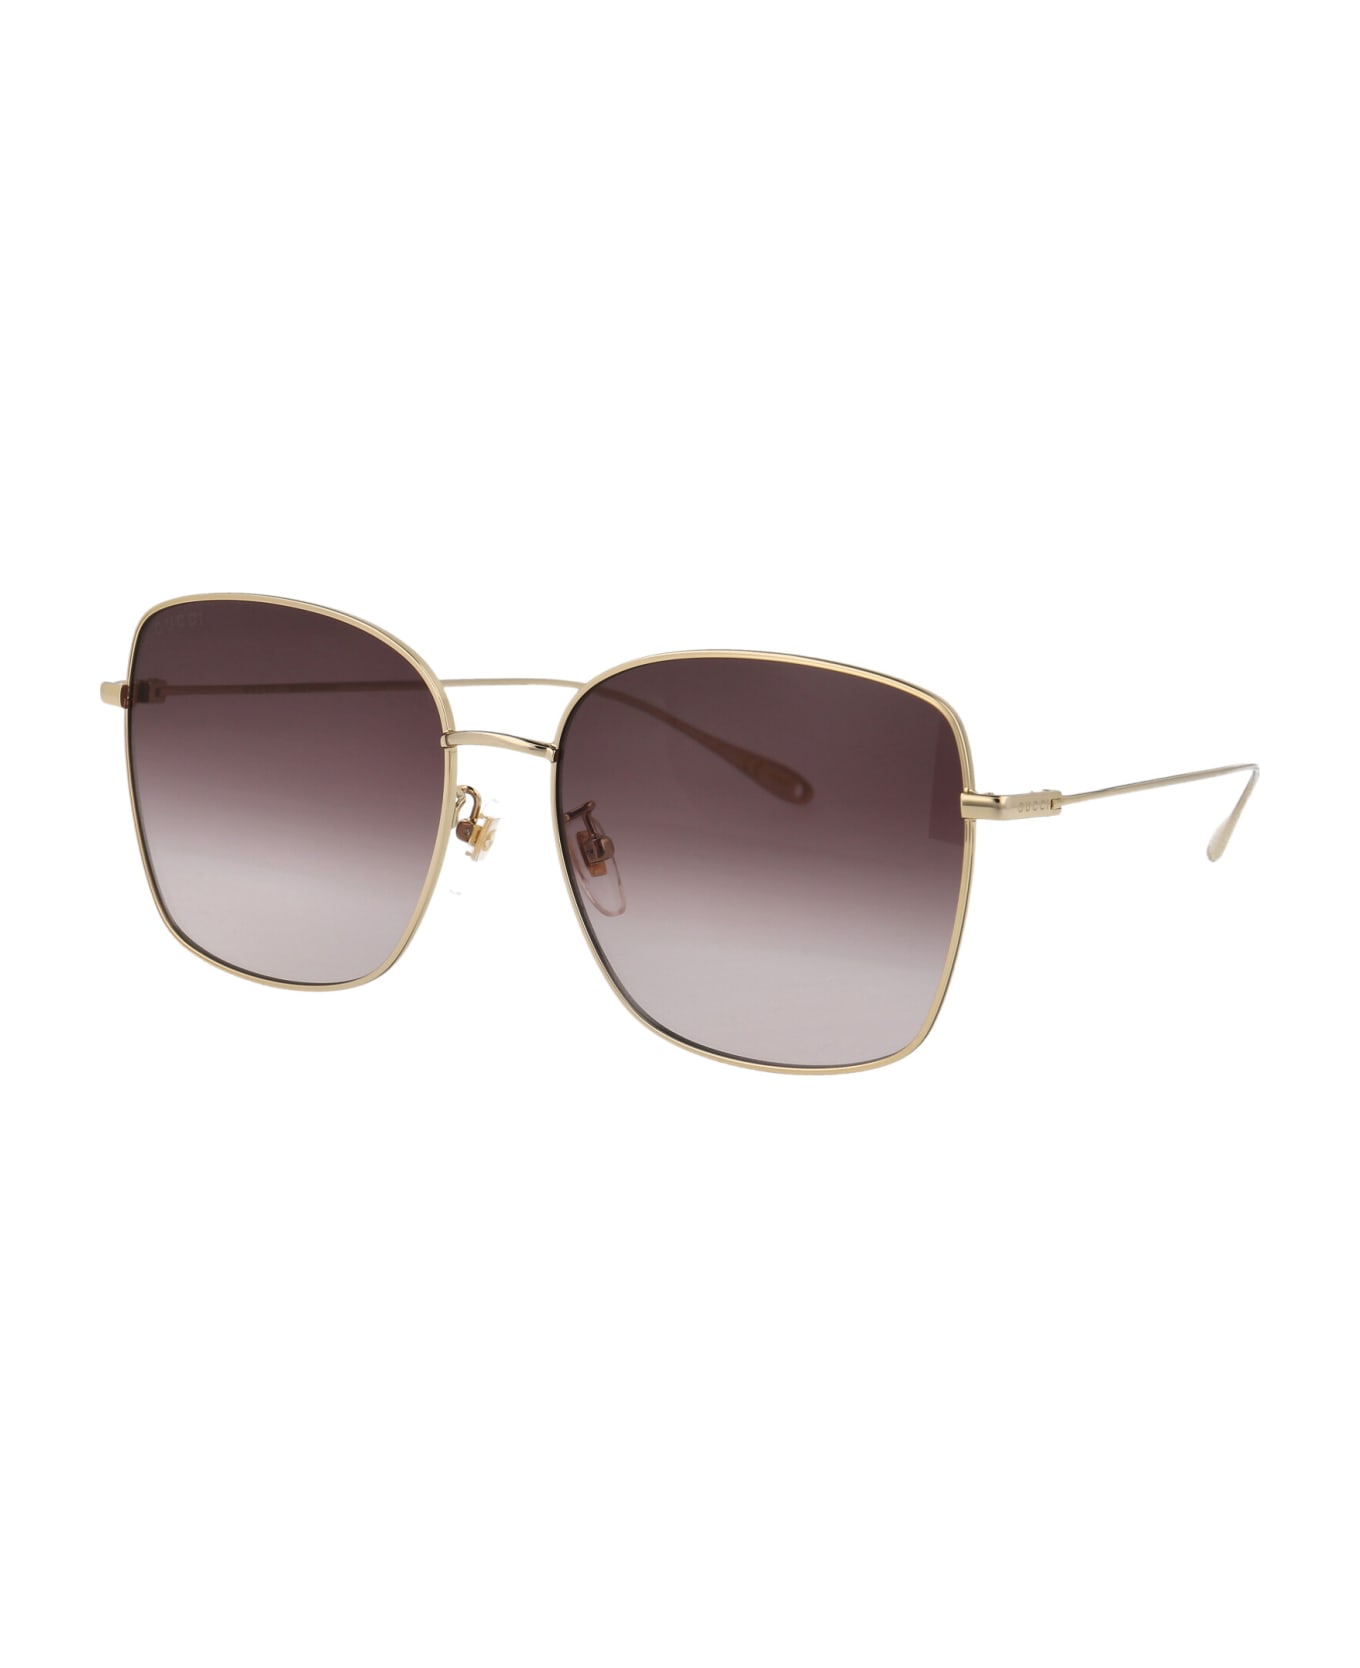 Gucci Eyewear Gg1030sk Sunglasses - 002 GOLD GOLD BROWN